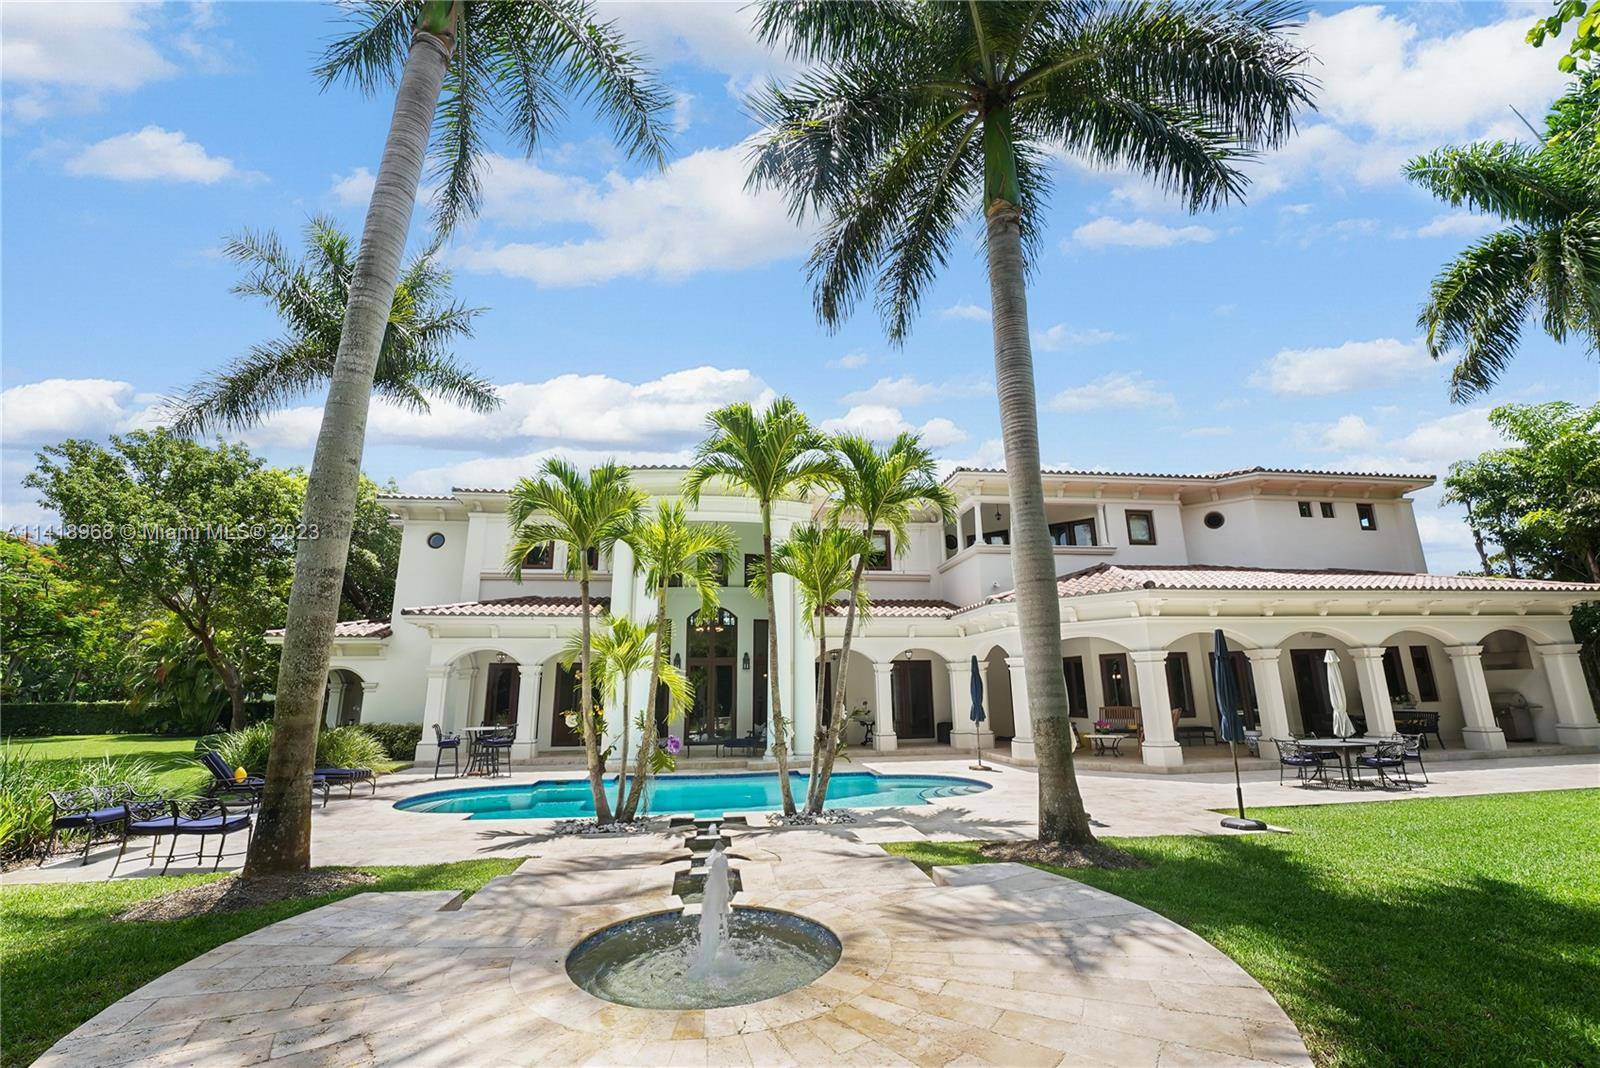 Welcome to Villa di Vista, an exquisite masterpiece in Pinecrest, FL.